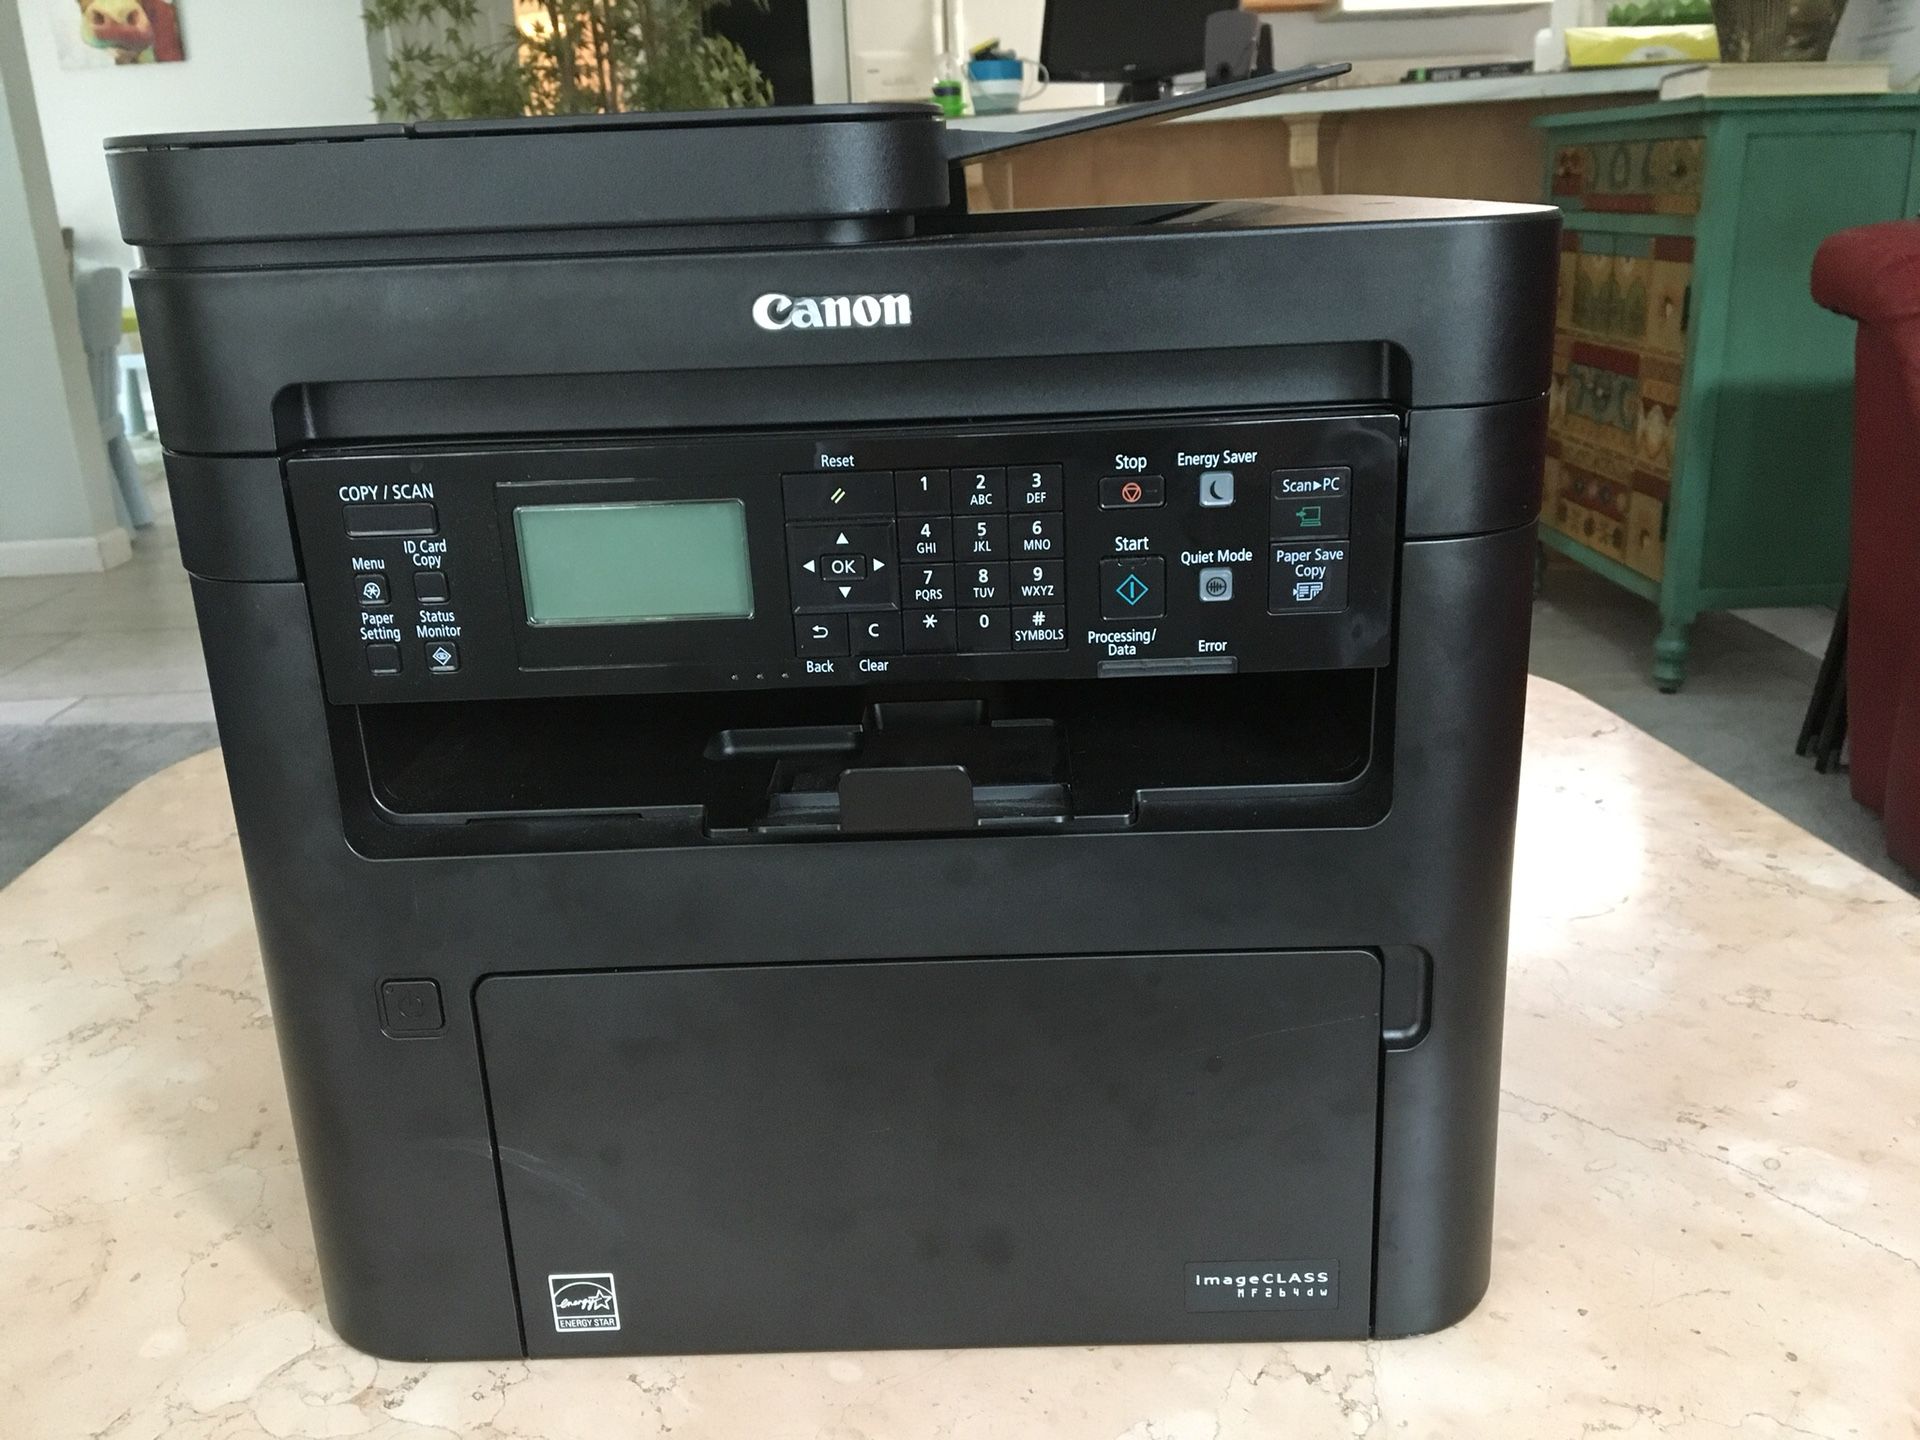 Canon B&W Laser Printer/Scanner w/ nearly full cartridge